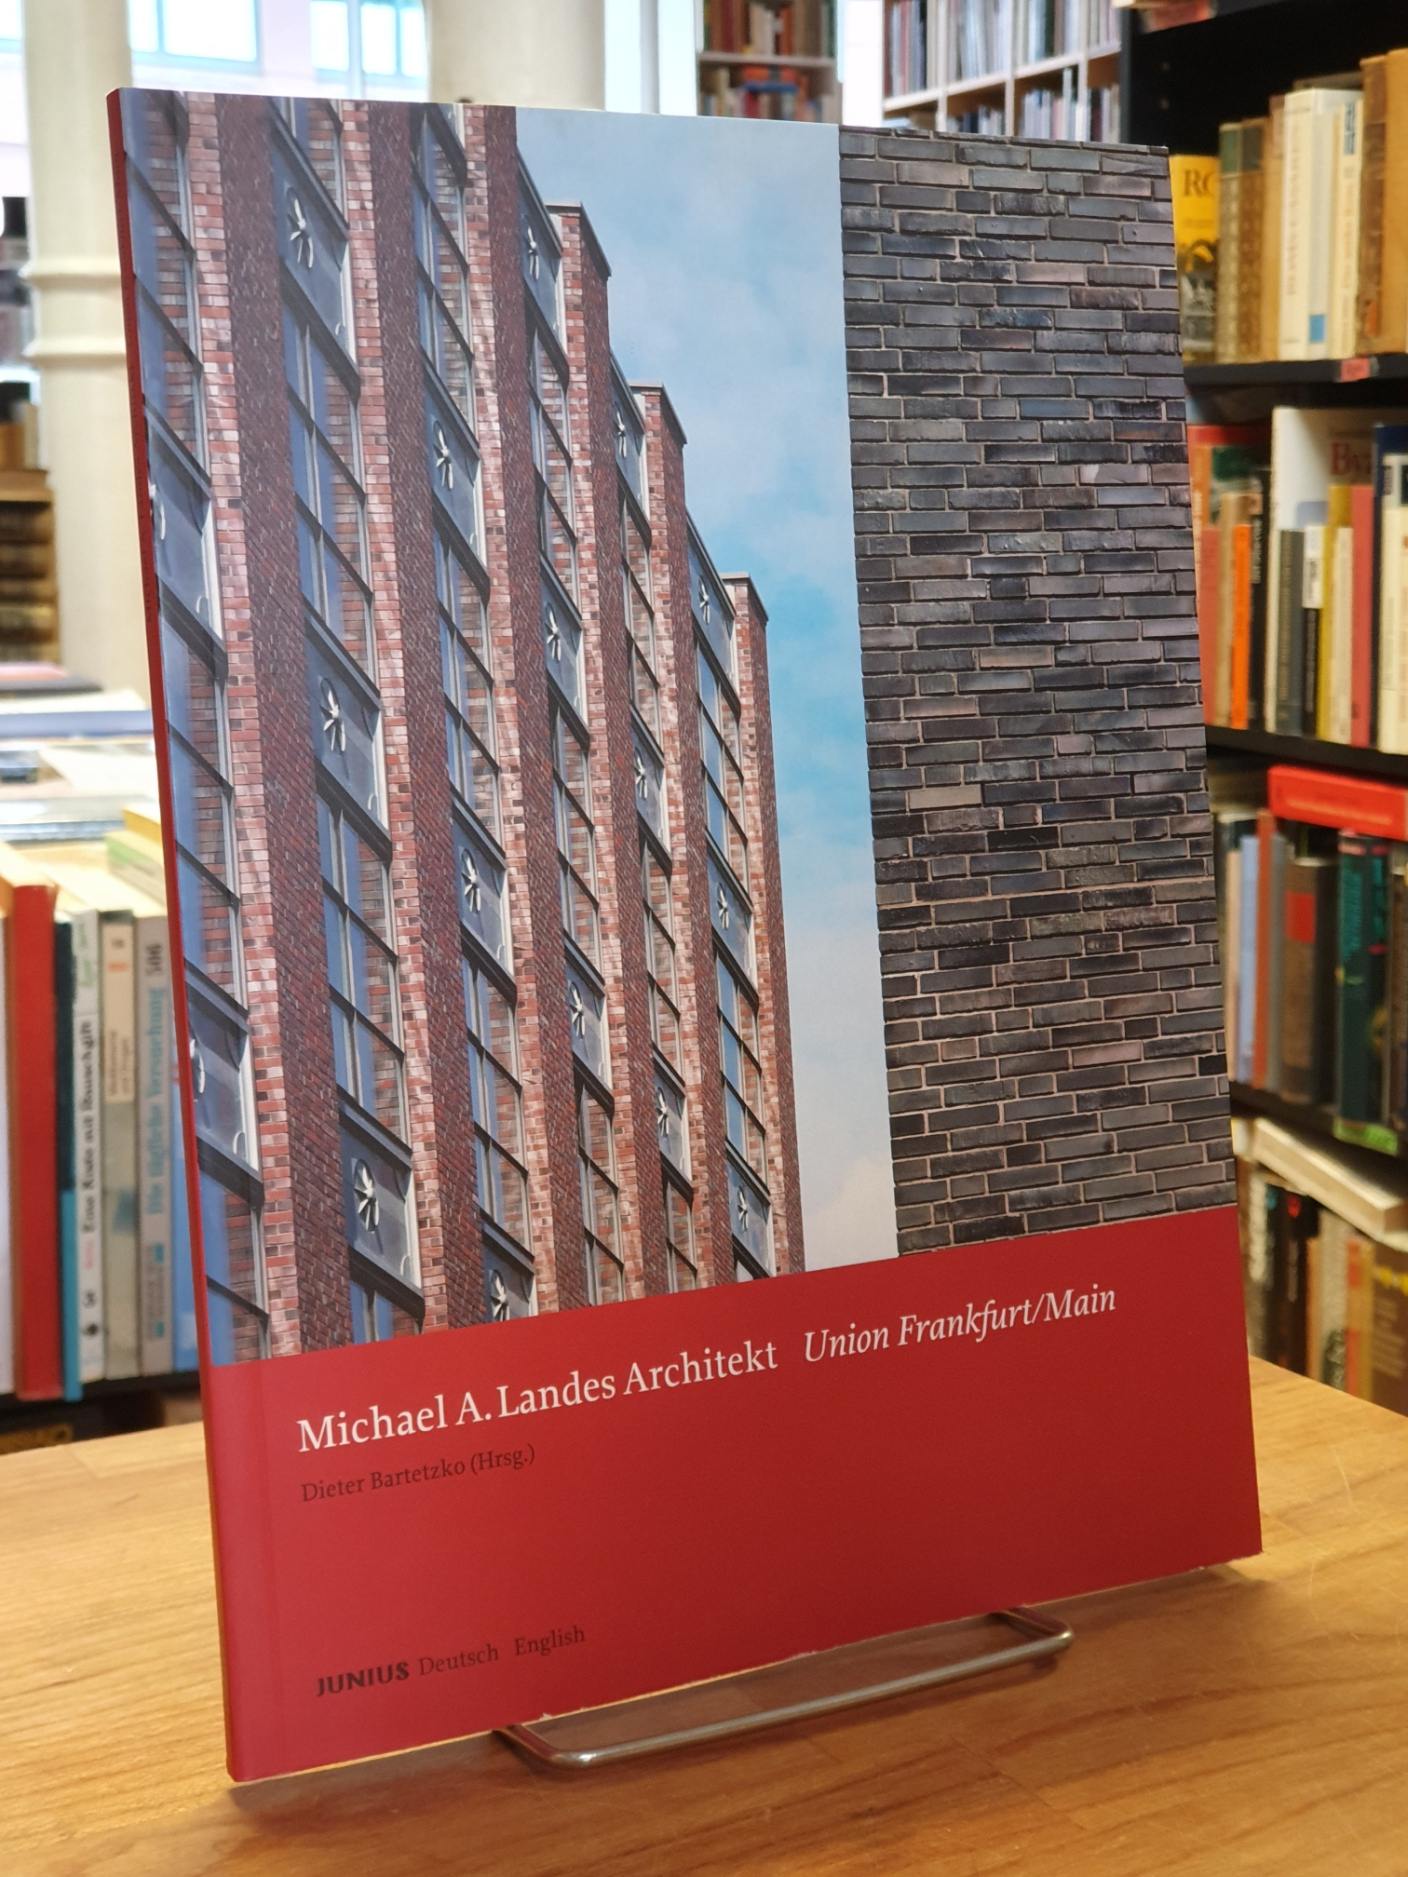 Michael A. Landes Architekt - Union Frankfurt/Main, - Bartetzko, Dieter (Hrsg.),